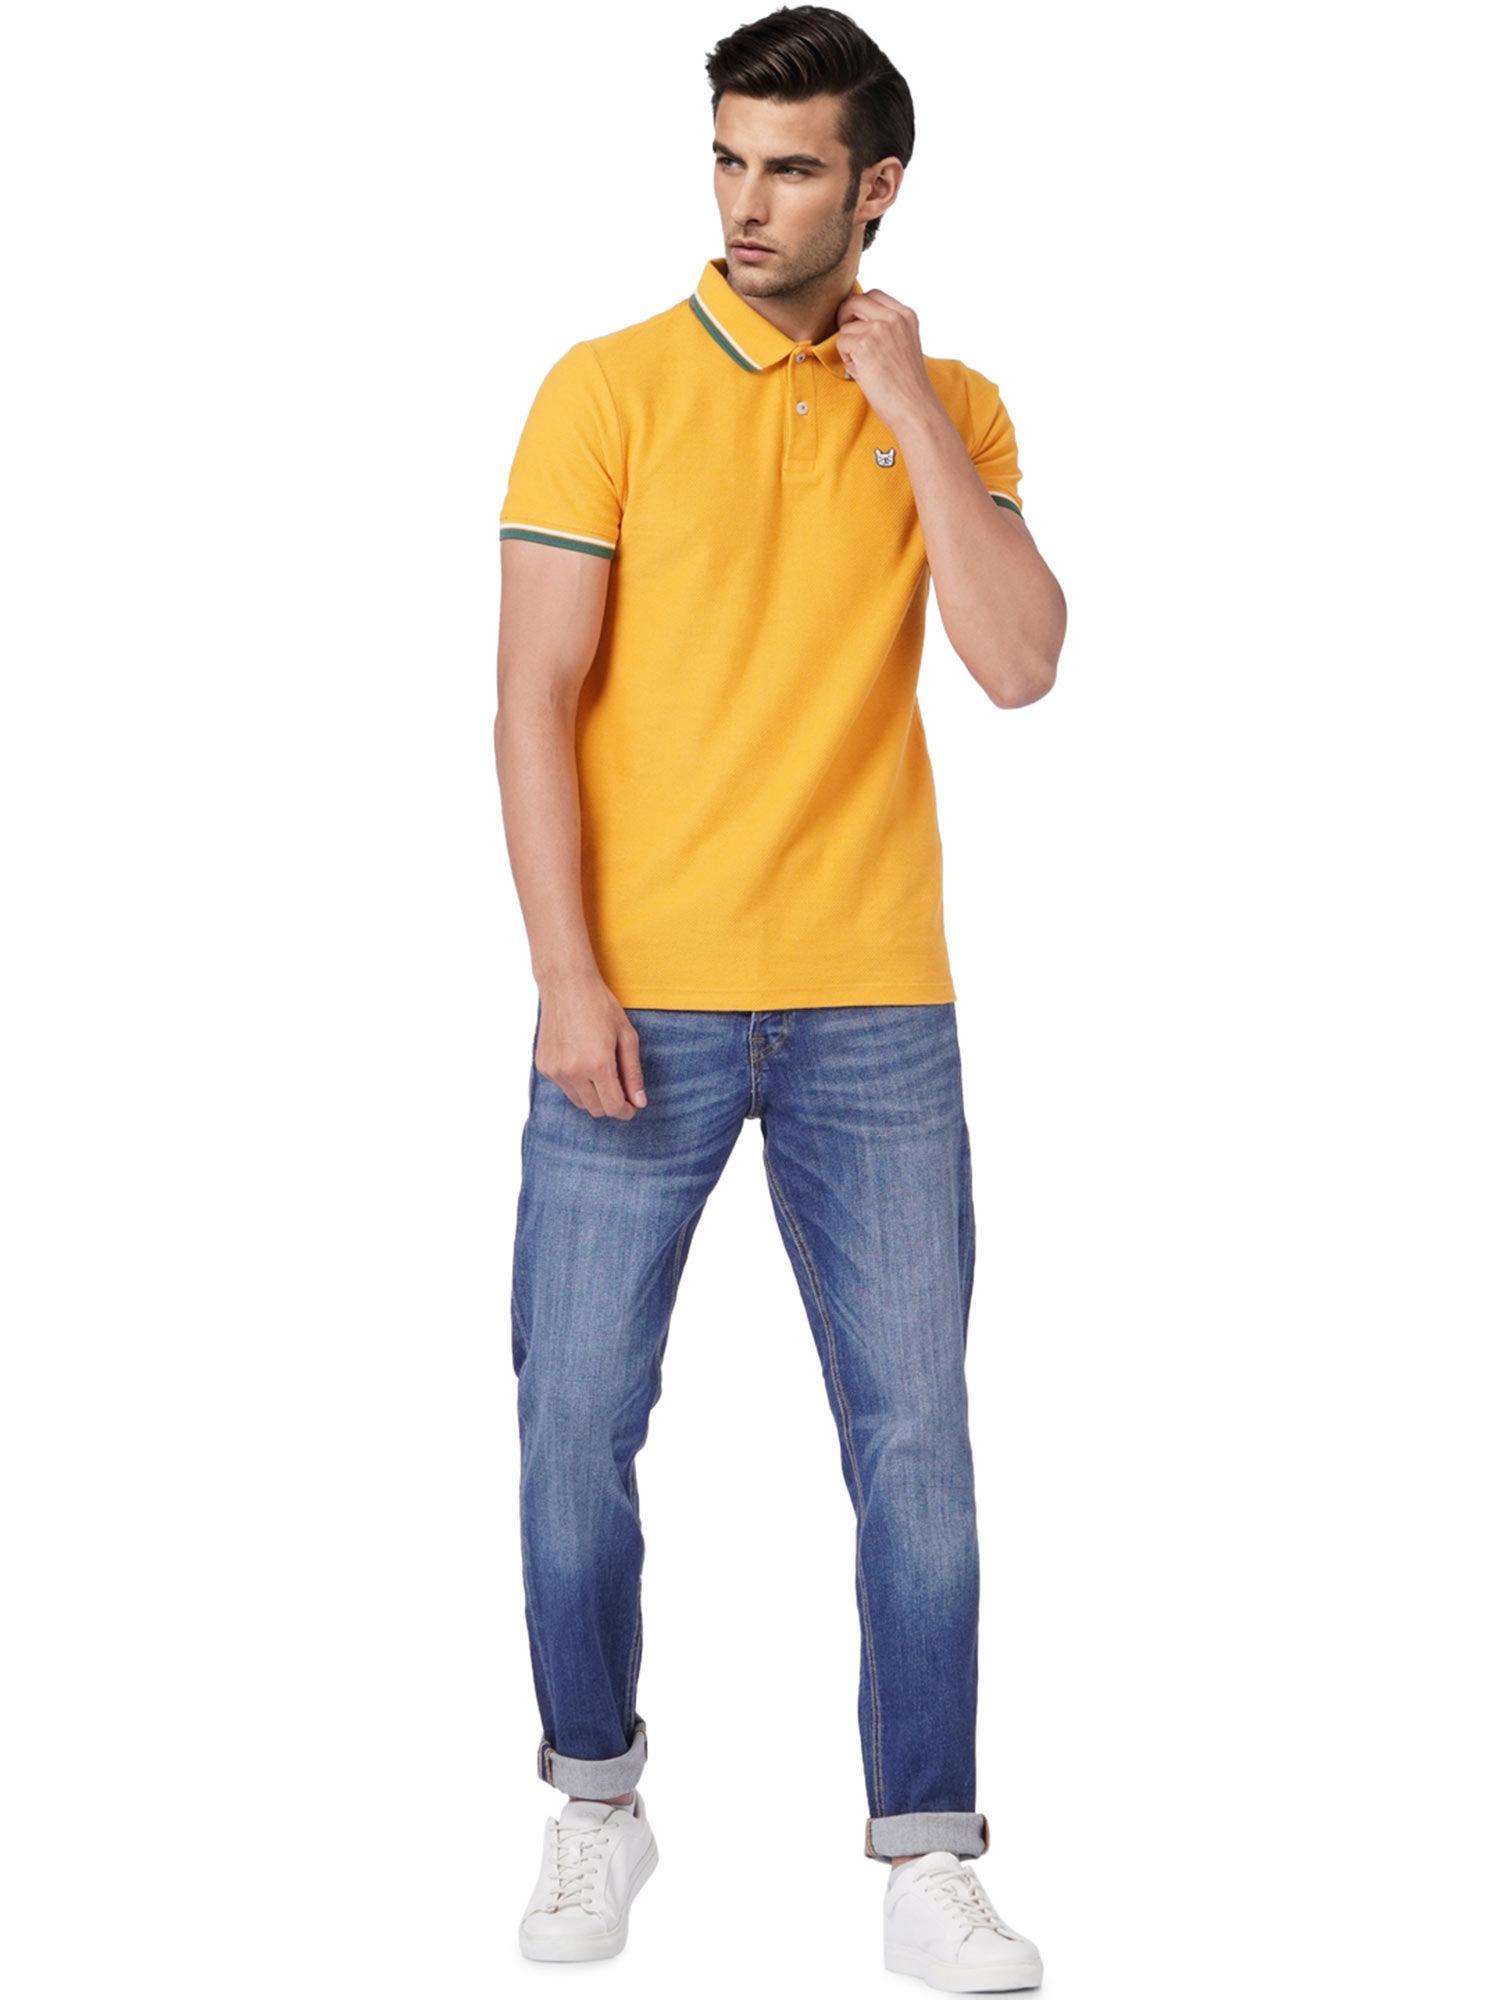 yellow polo neck t-shirt